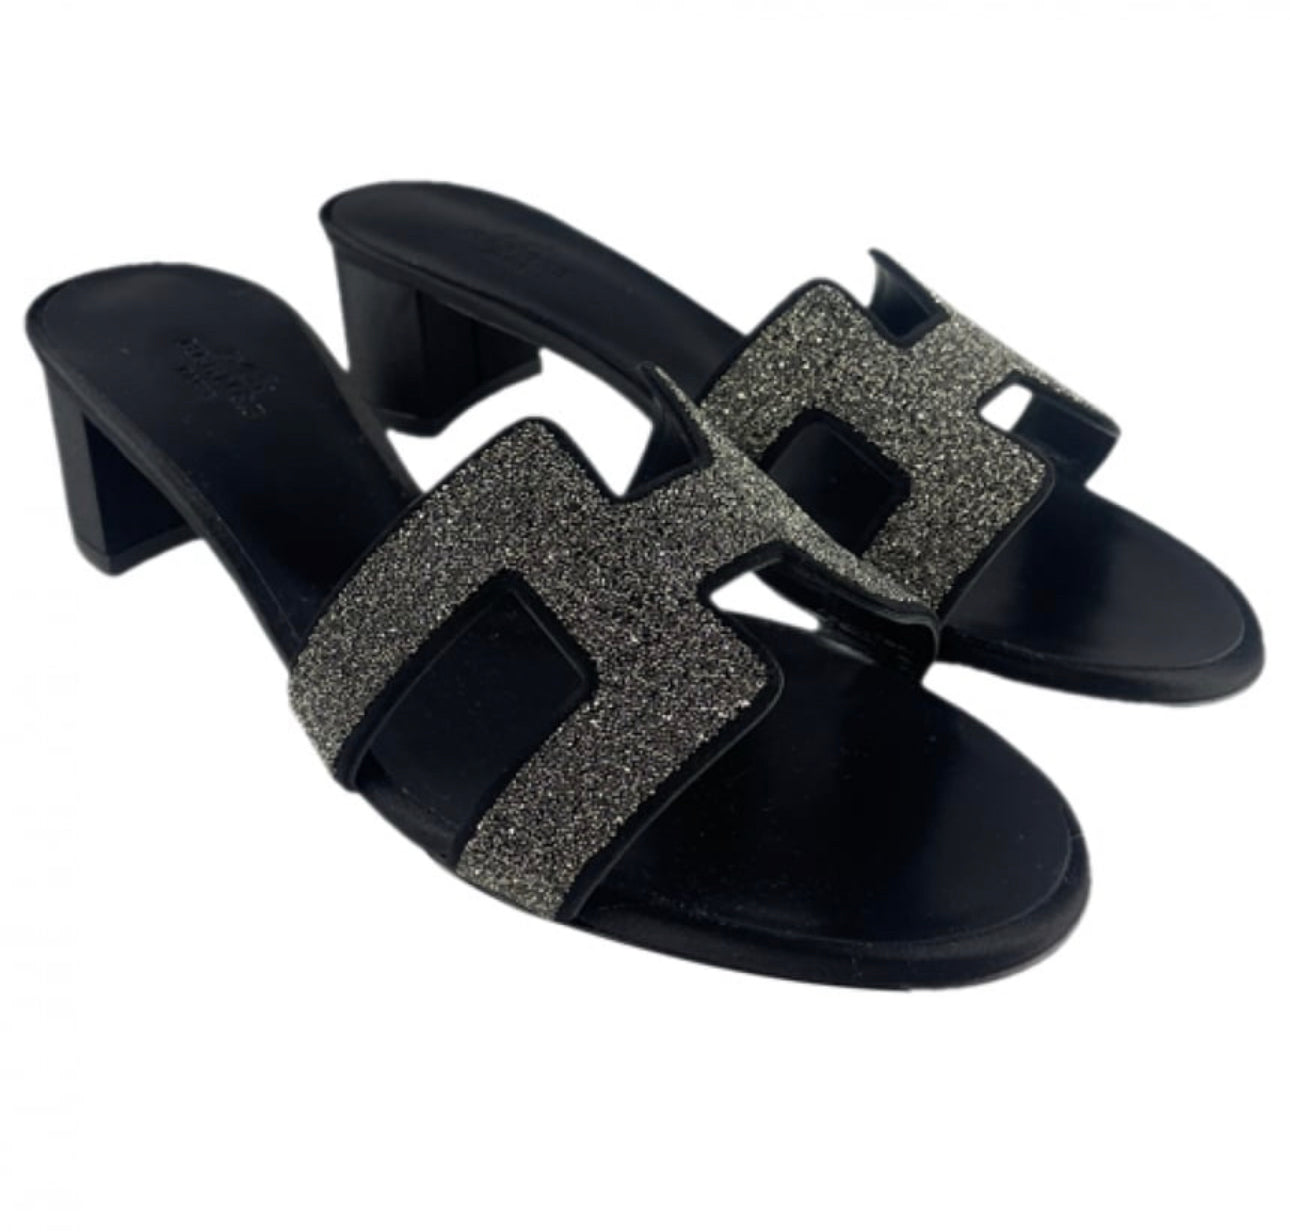 HERMÈS - Sandals Oasis black chèvre velour and crystal